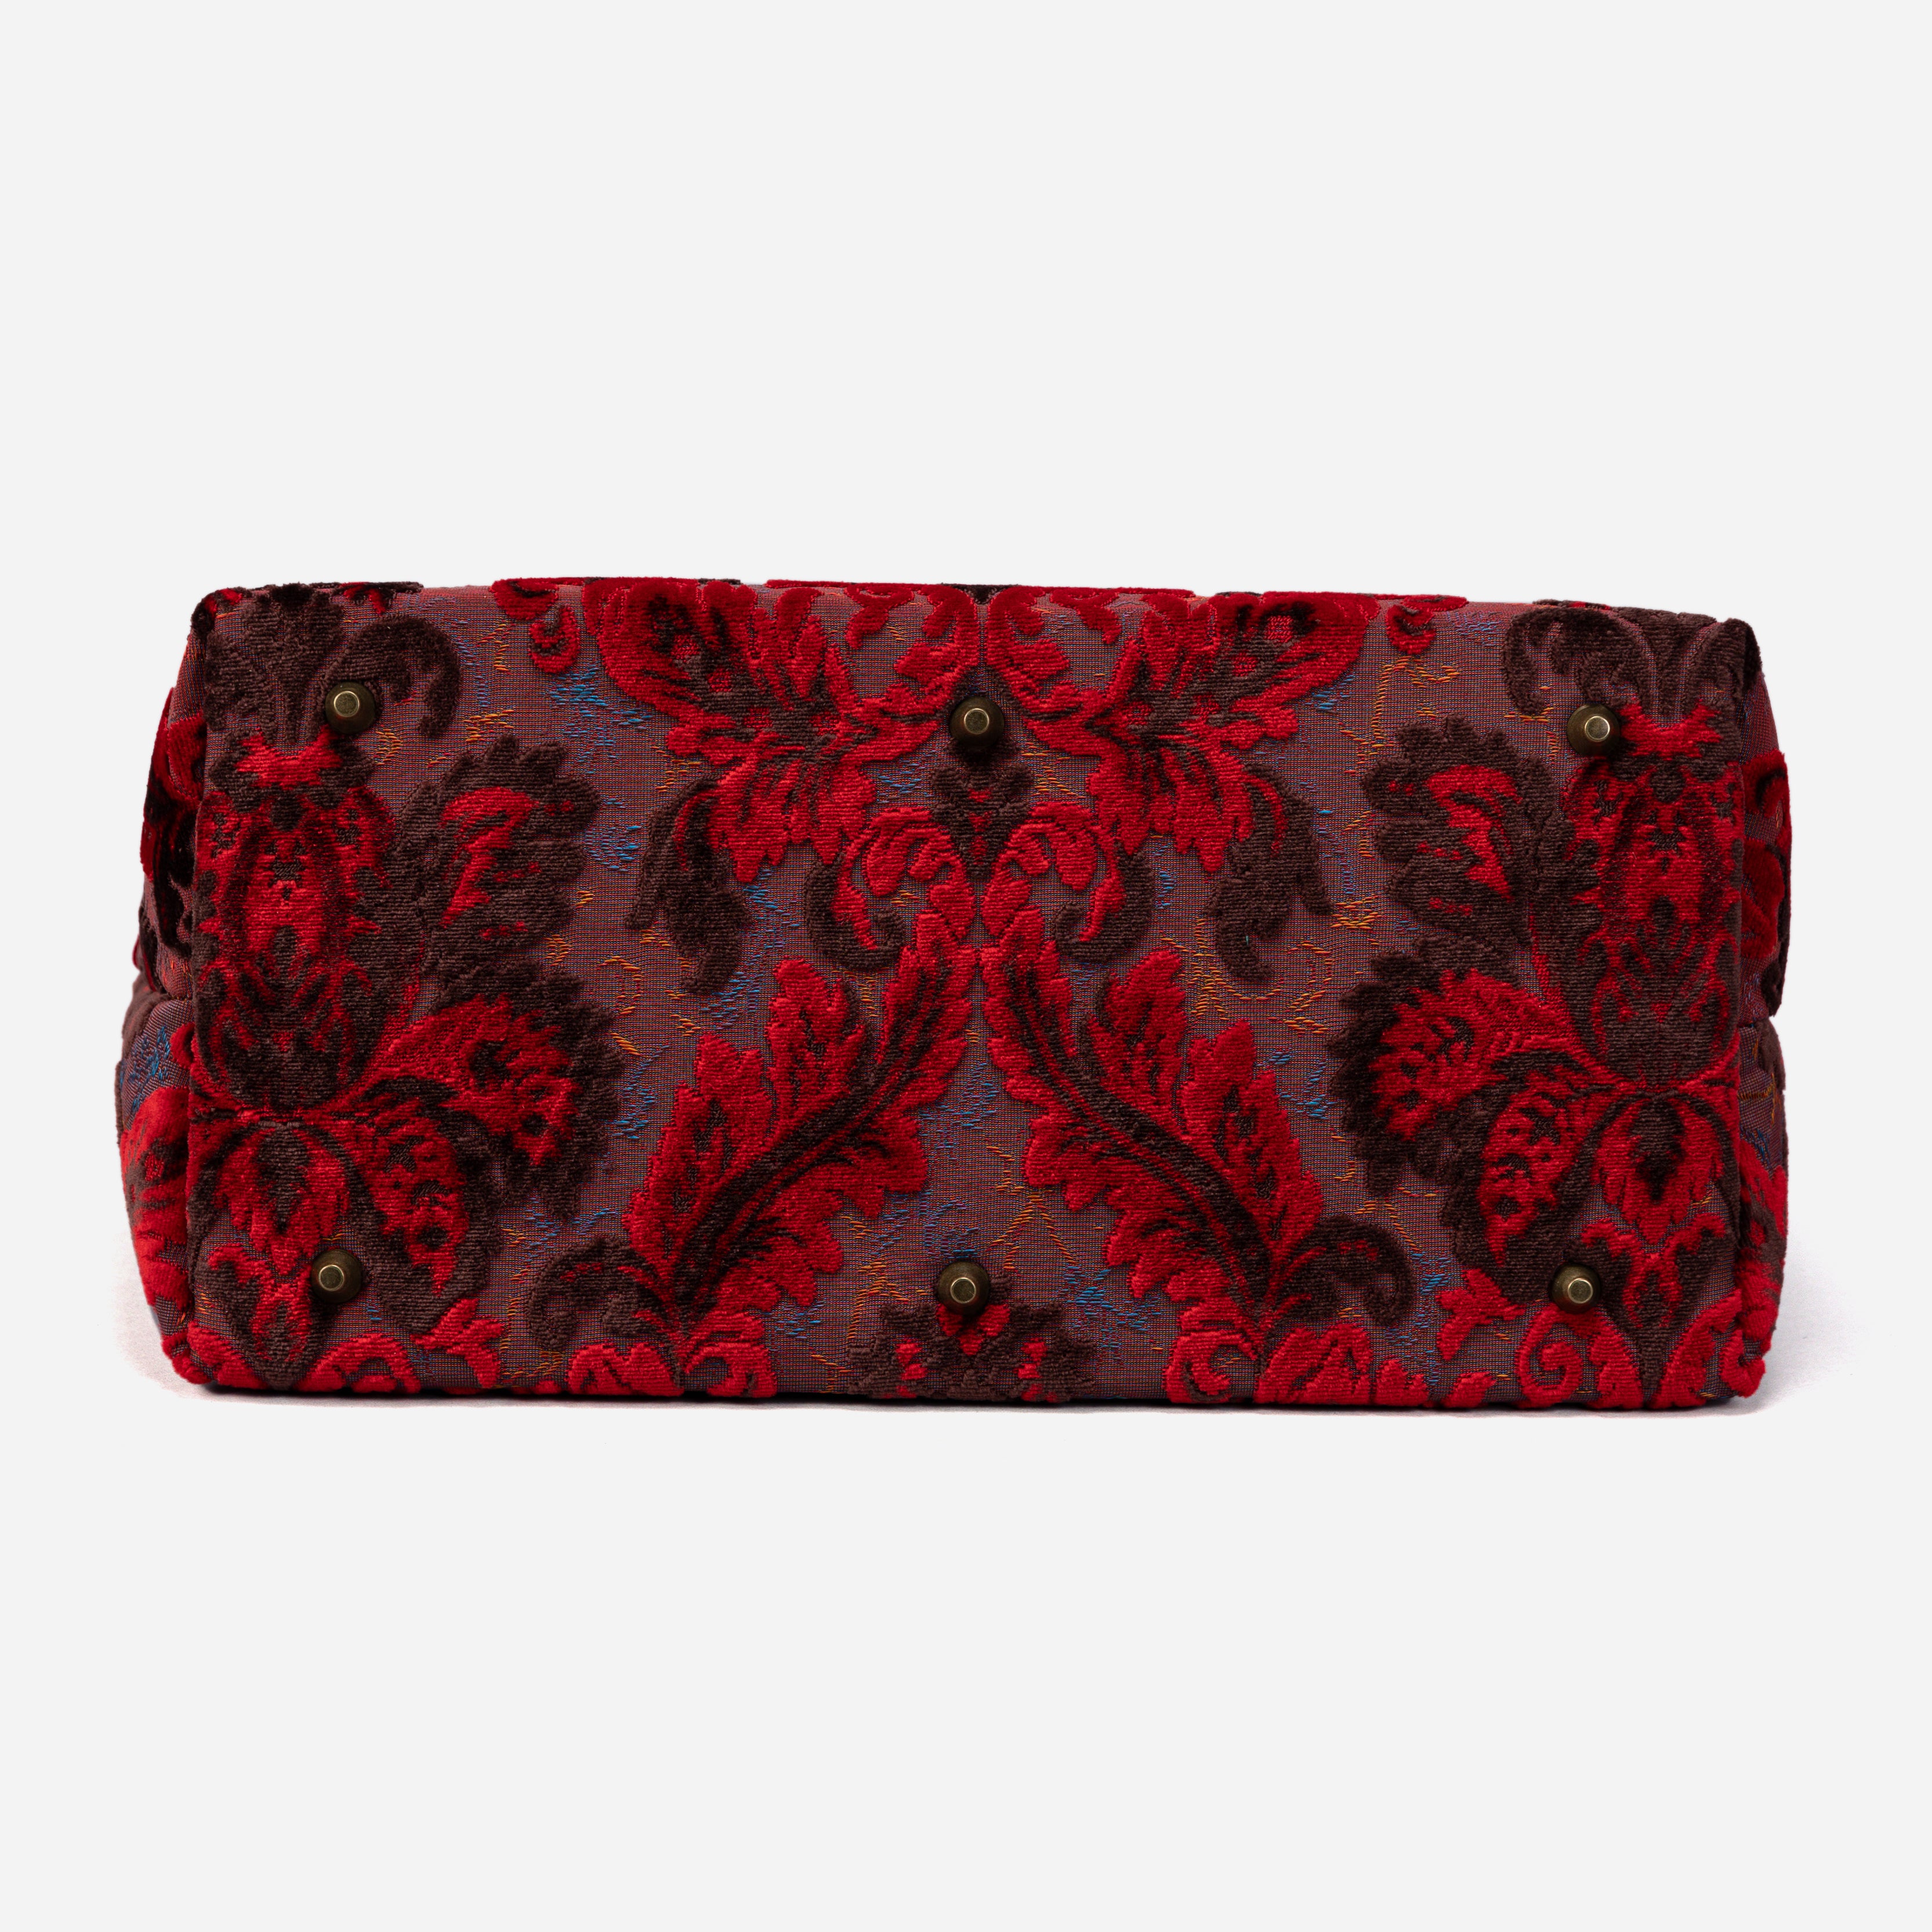 Mary Poppins Carpetbag Revival scarlet weekender bottom